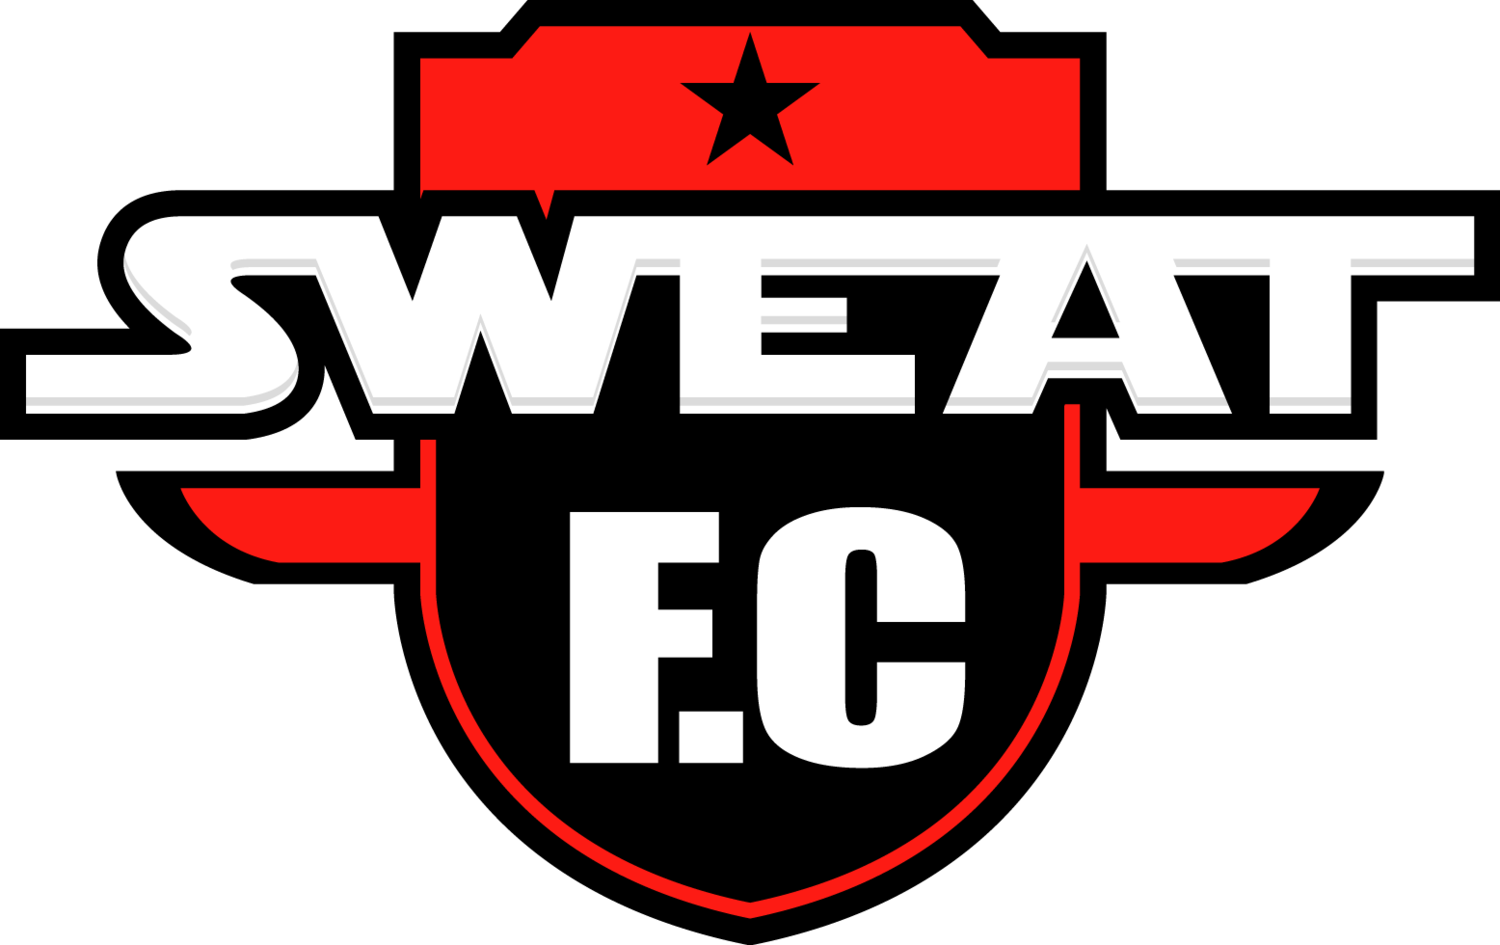 Sweat Phoenix Youth Soccer Club